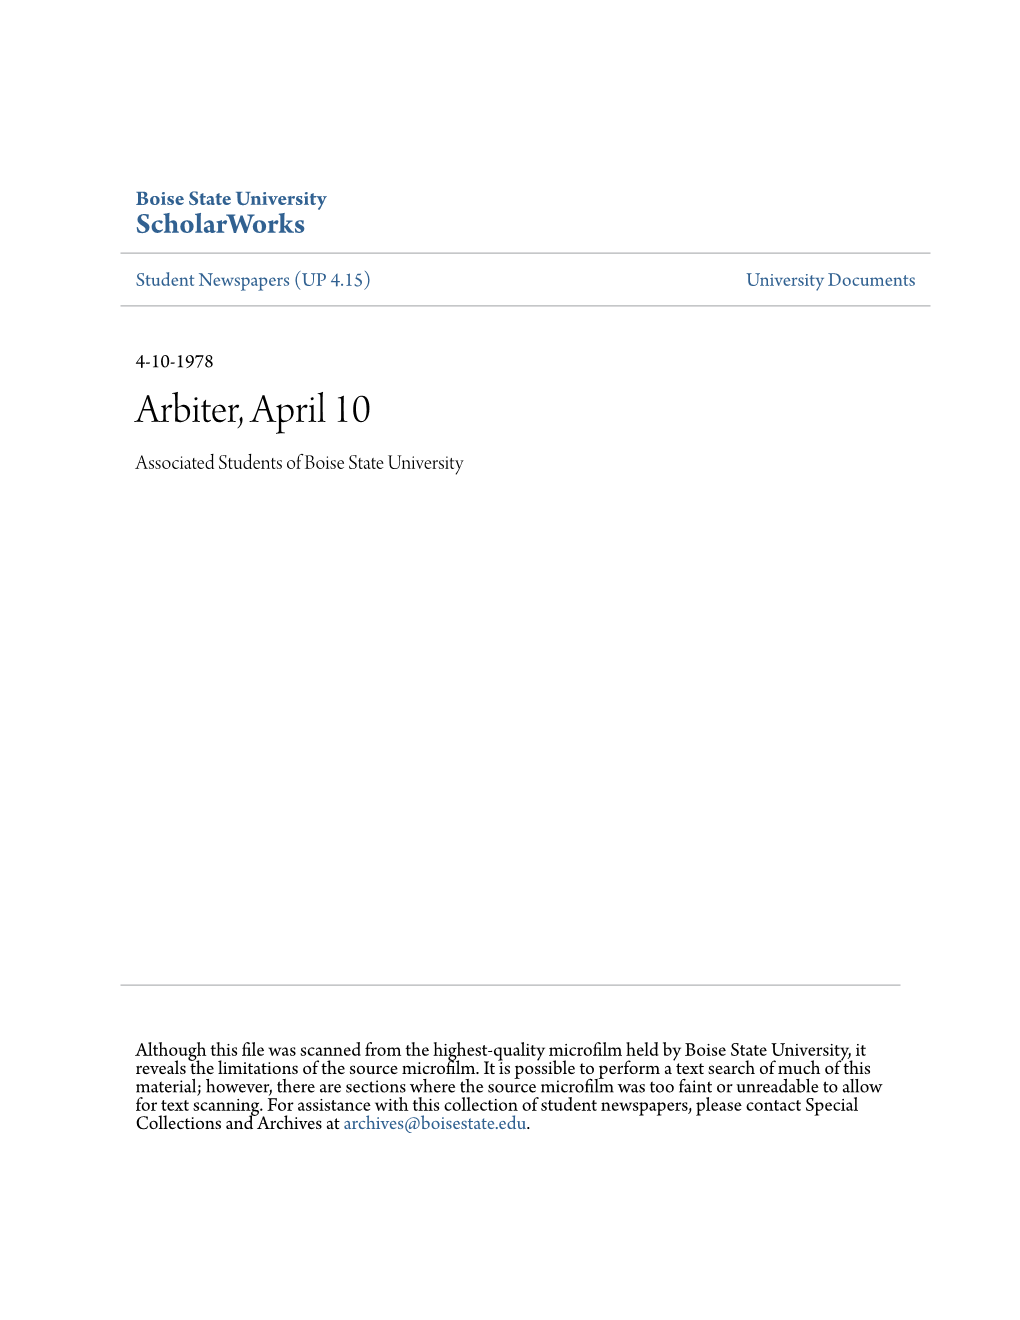 Arbiter, April 10 Associated Students of Boise State University